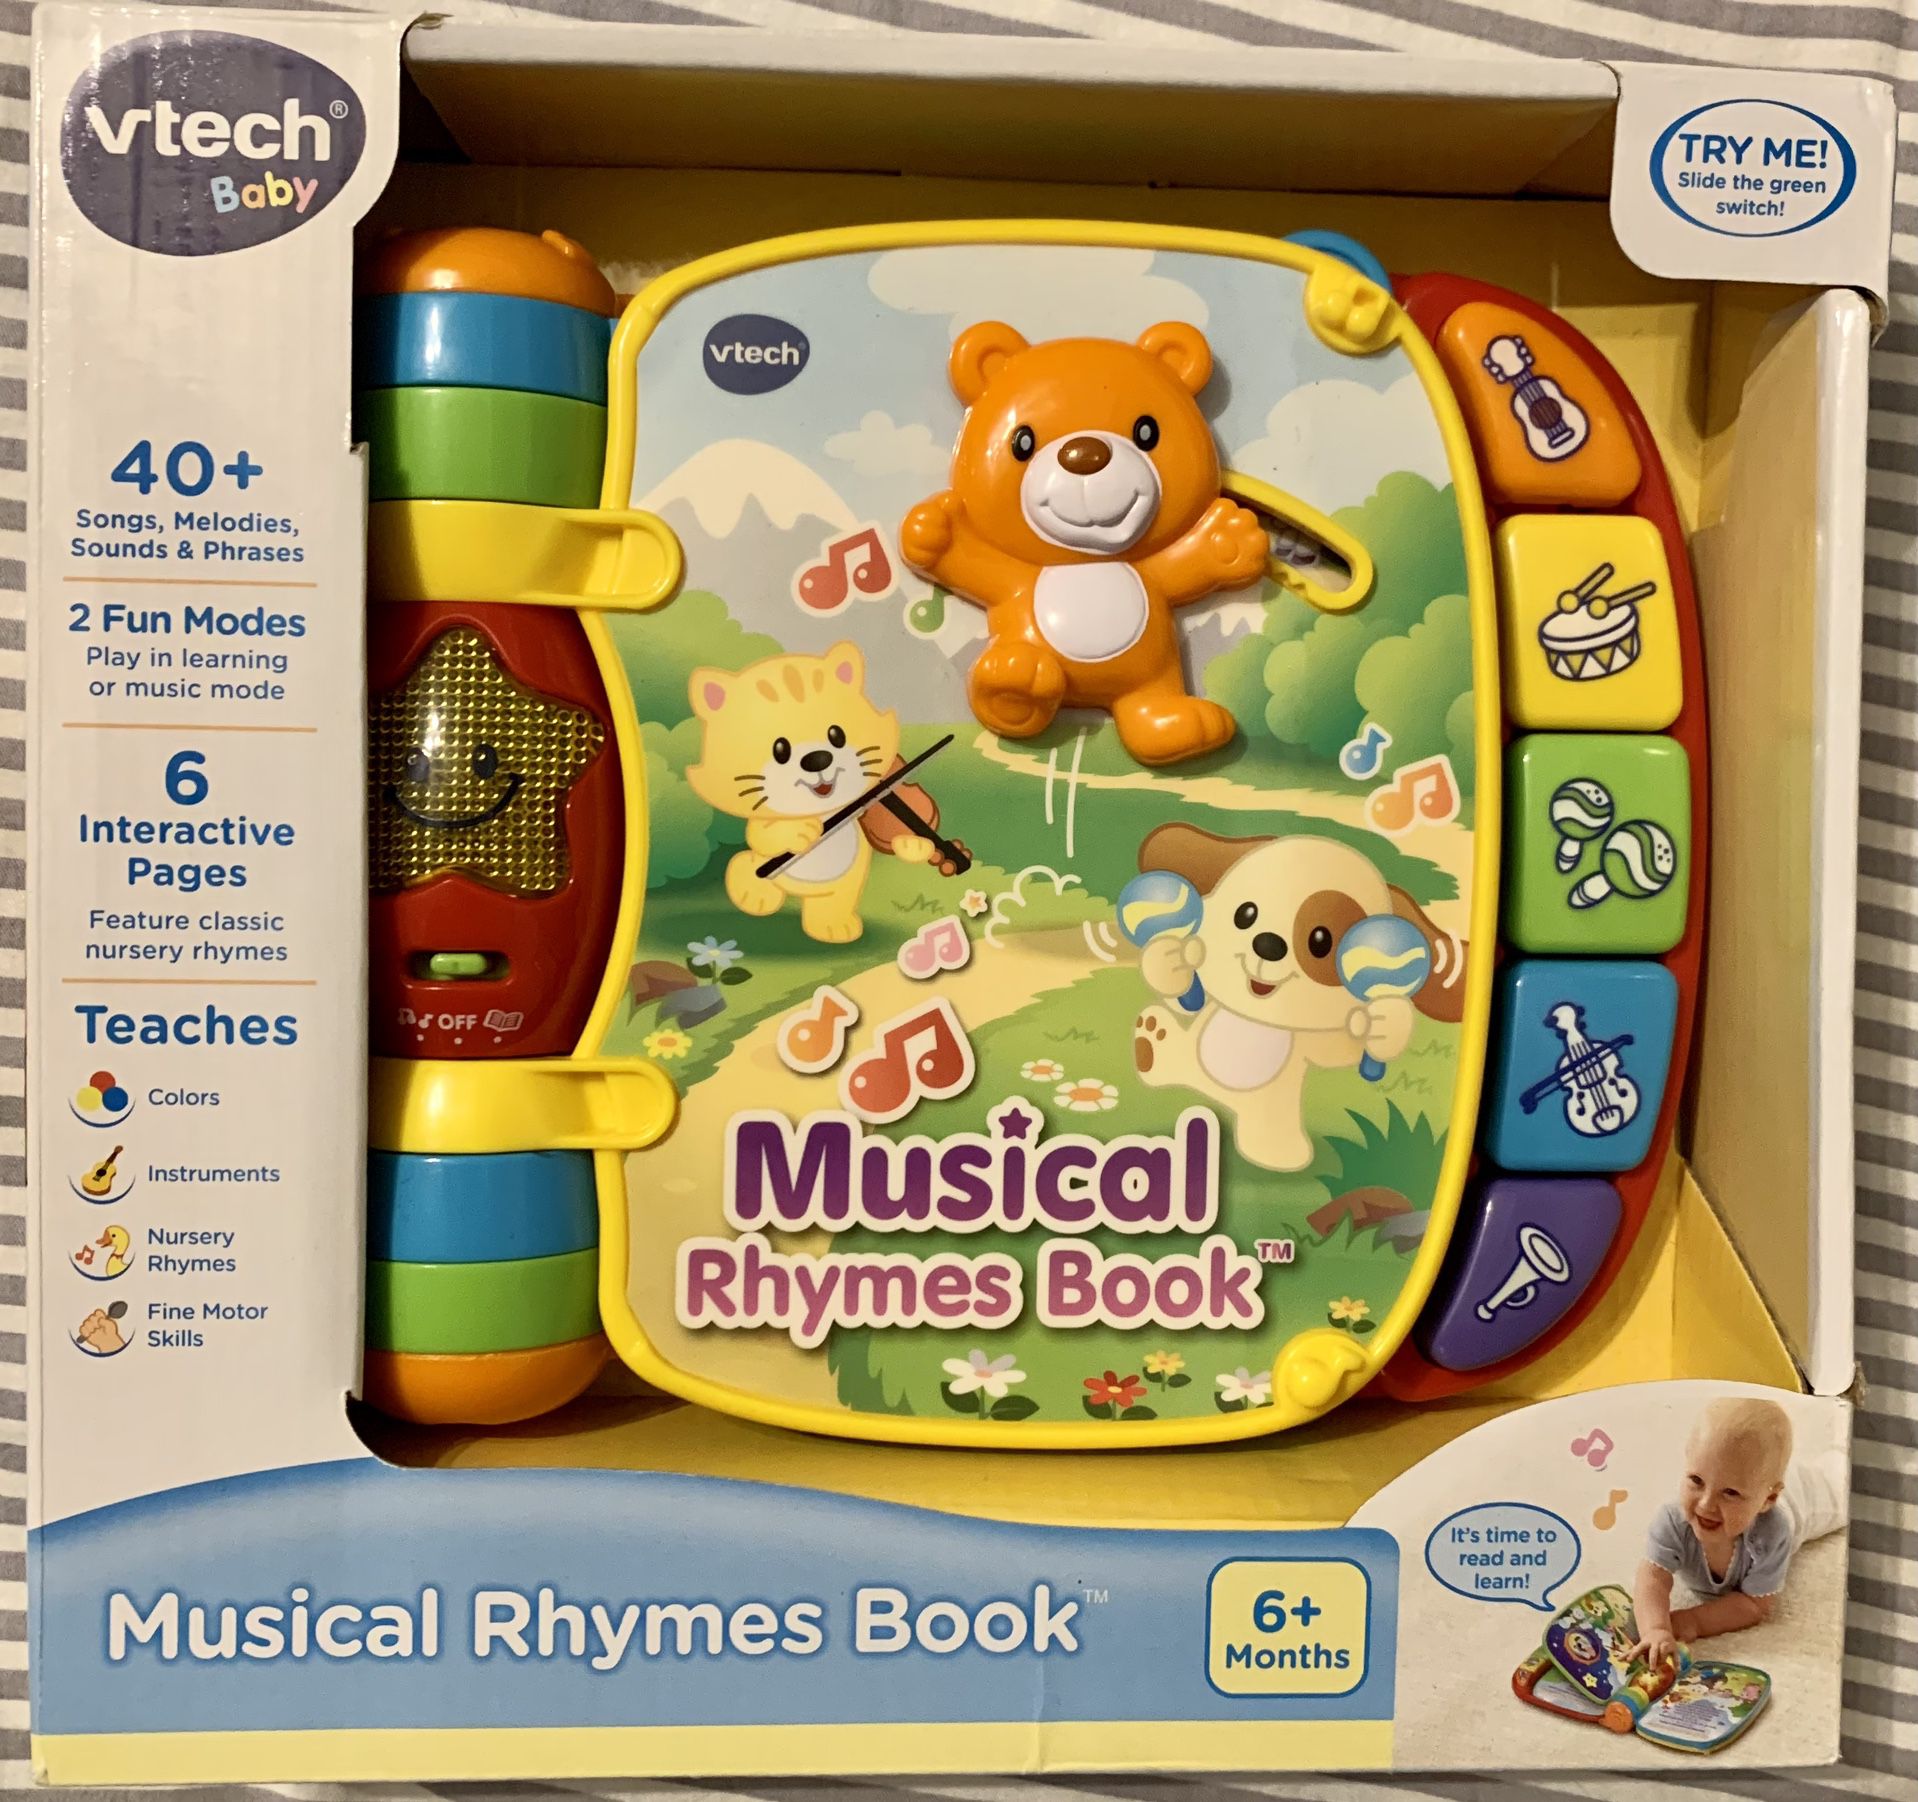 Vtech Musical Rhymes Book - $15 